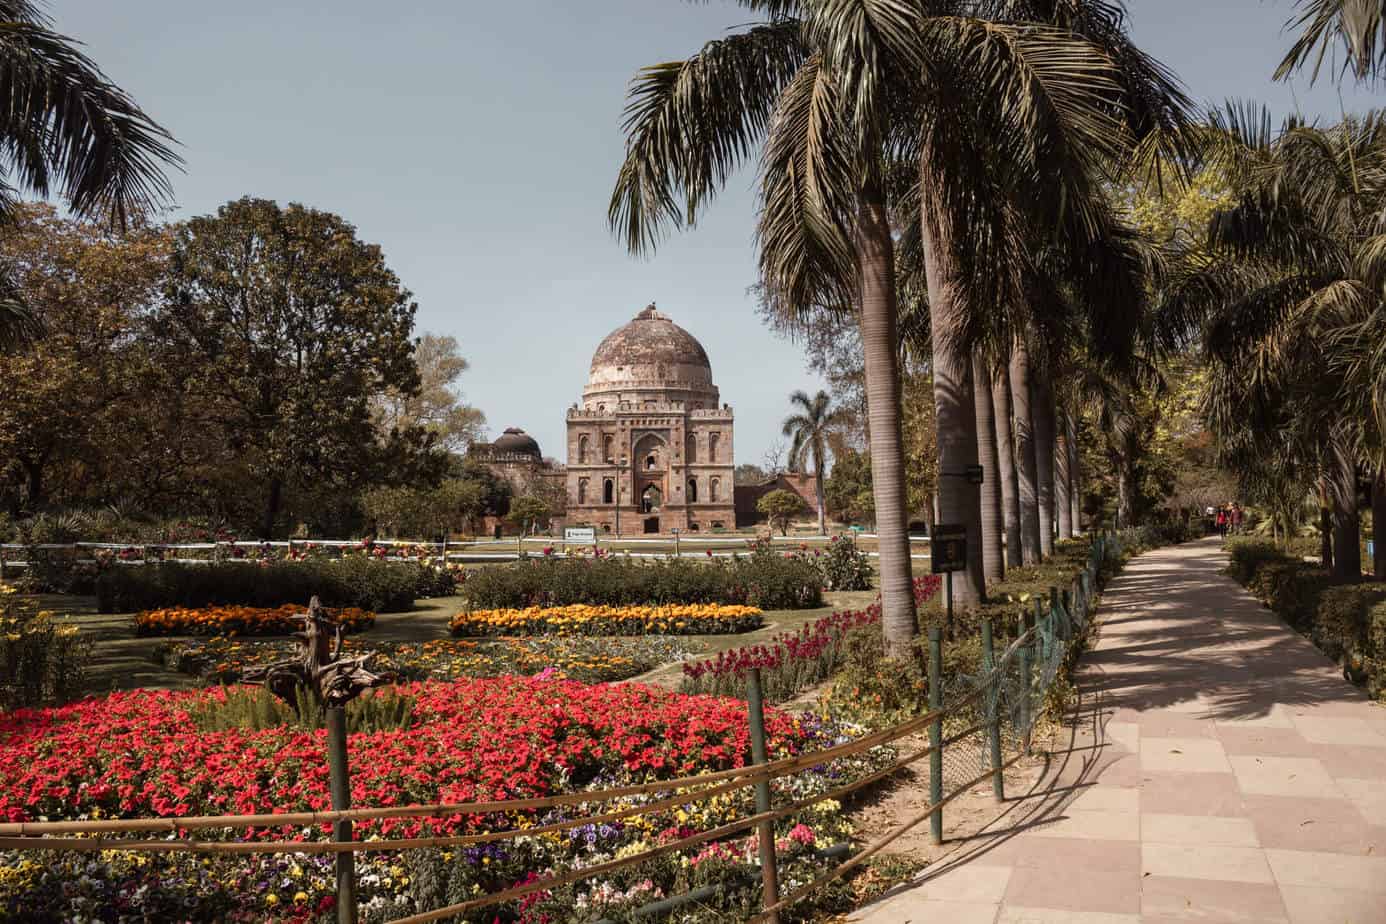 Lodhi Gardens in New Delhi, India